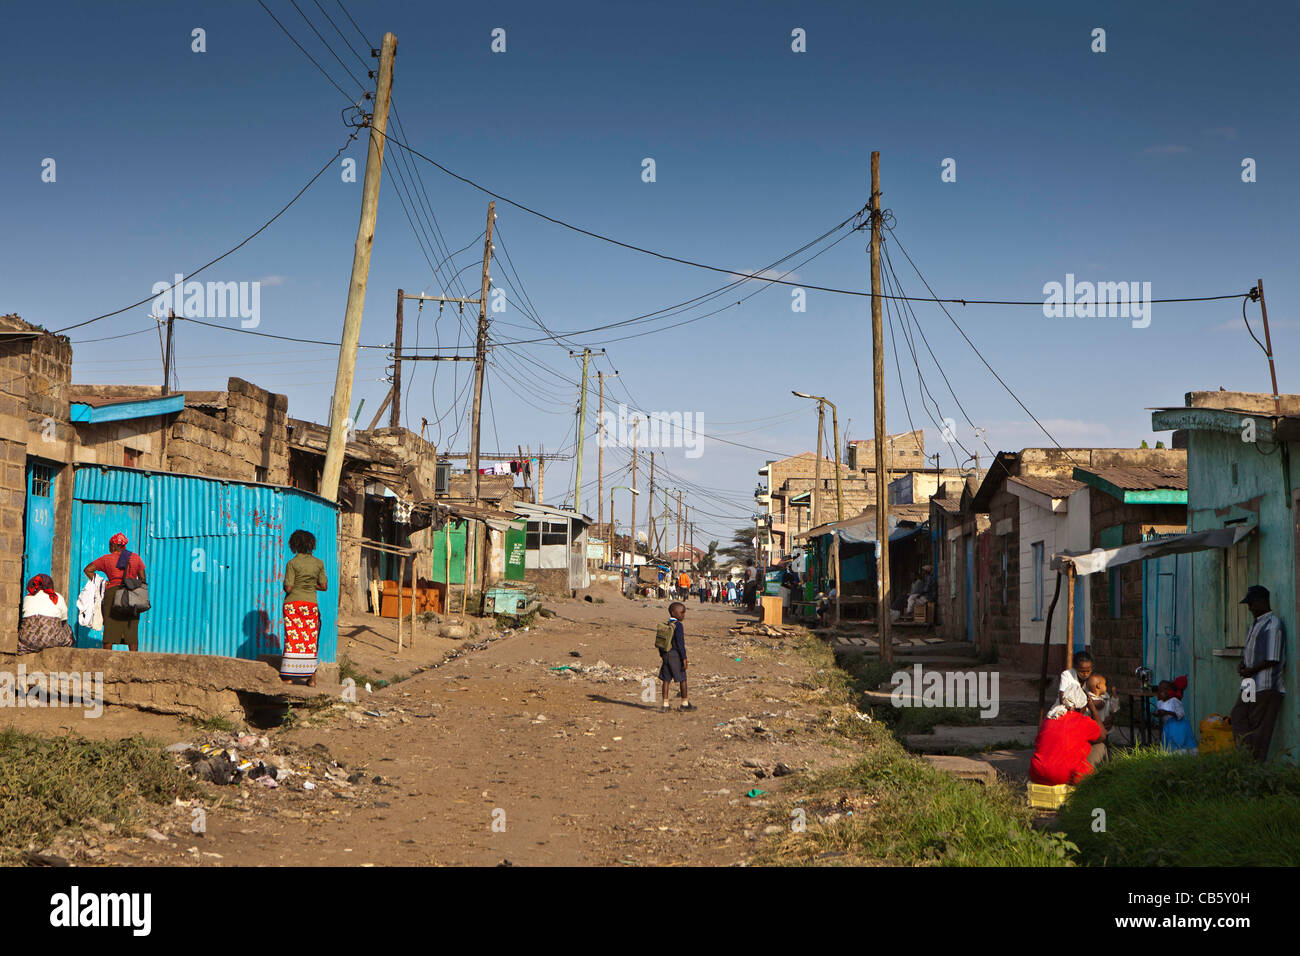 A street scene from Dandora slum, Nairobi, Kenya. Stock Photo